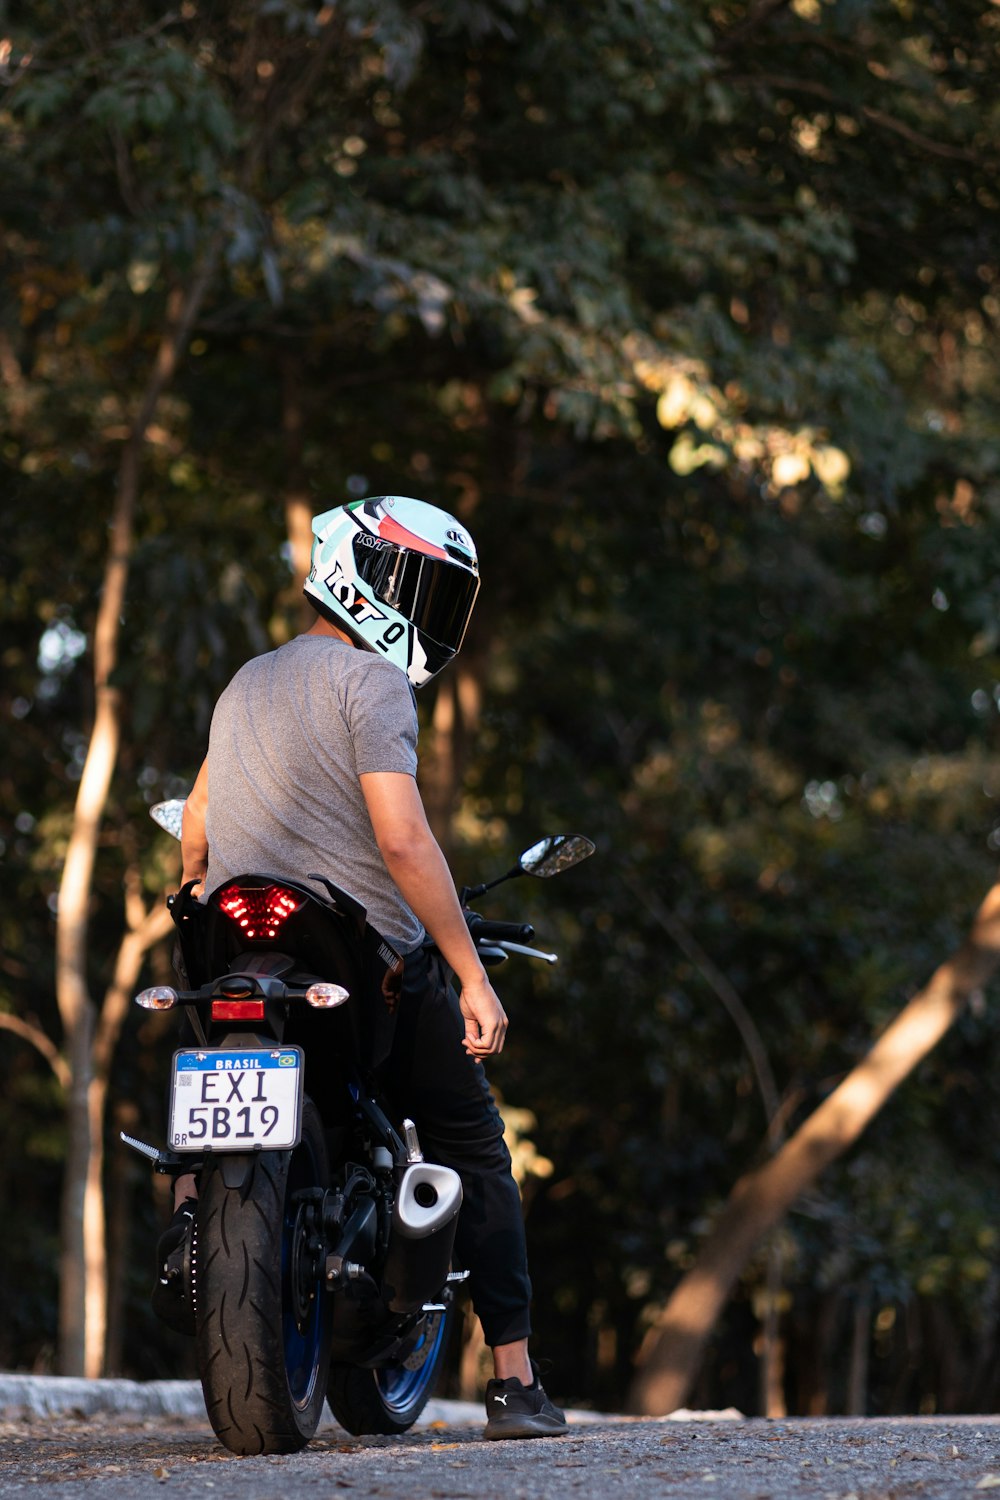 Man in white shirt riding motorcycle photo – Free Helmet Image on Unsplash